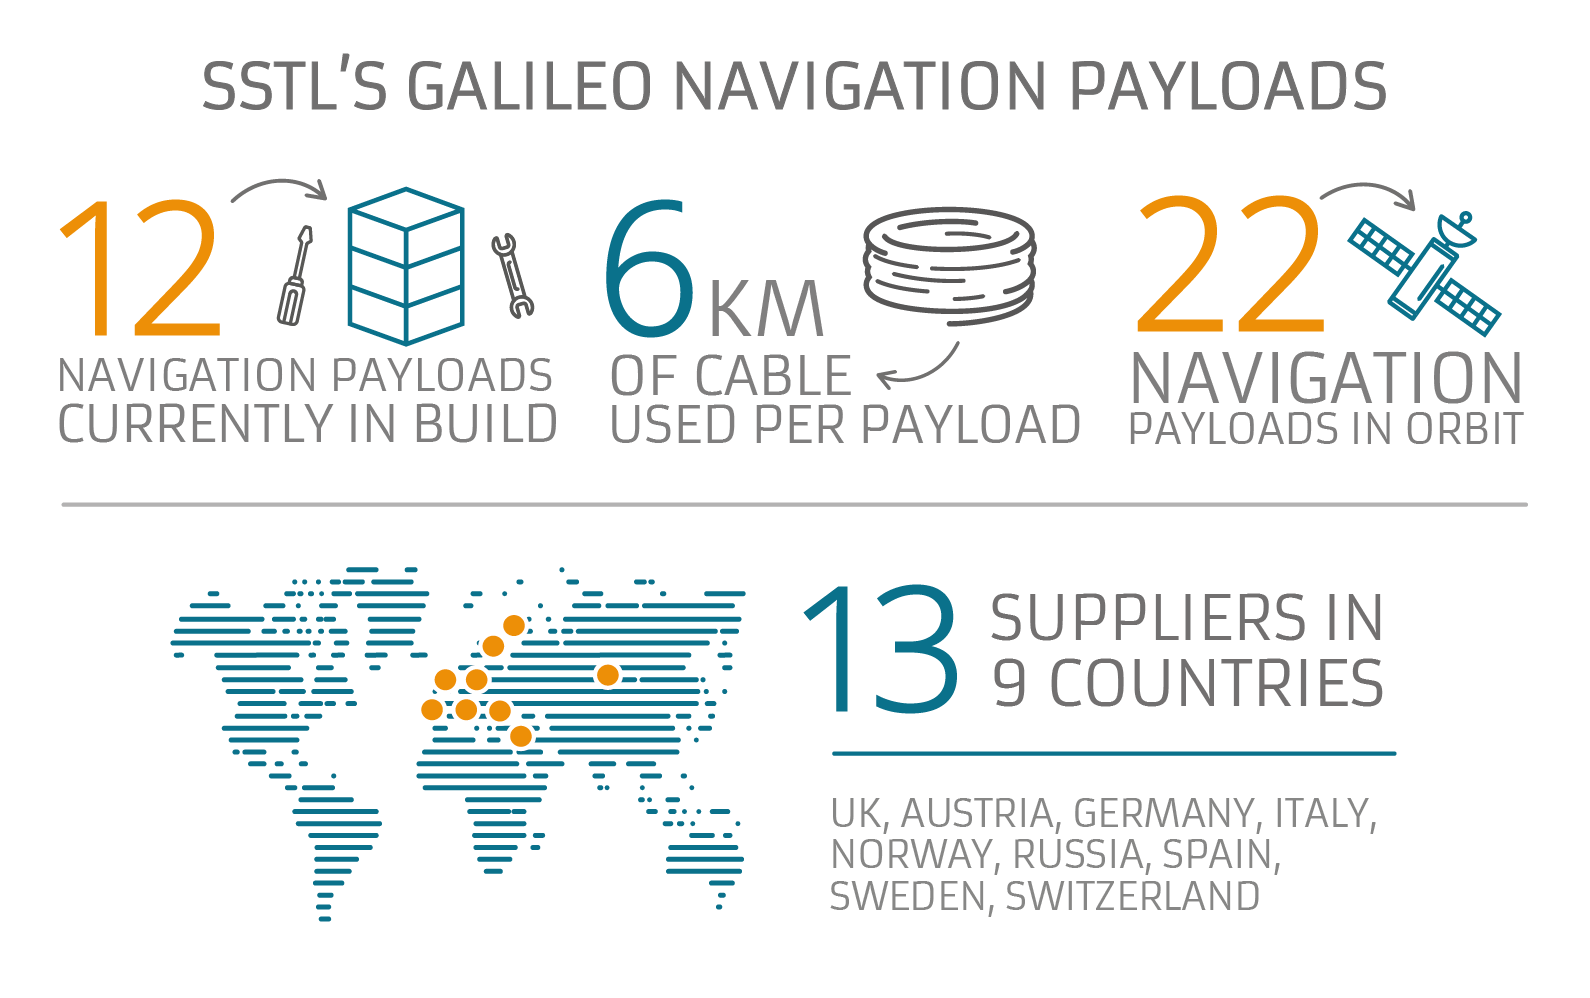 SSTL's Galileo Navigation Payload